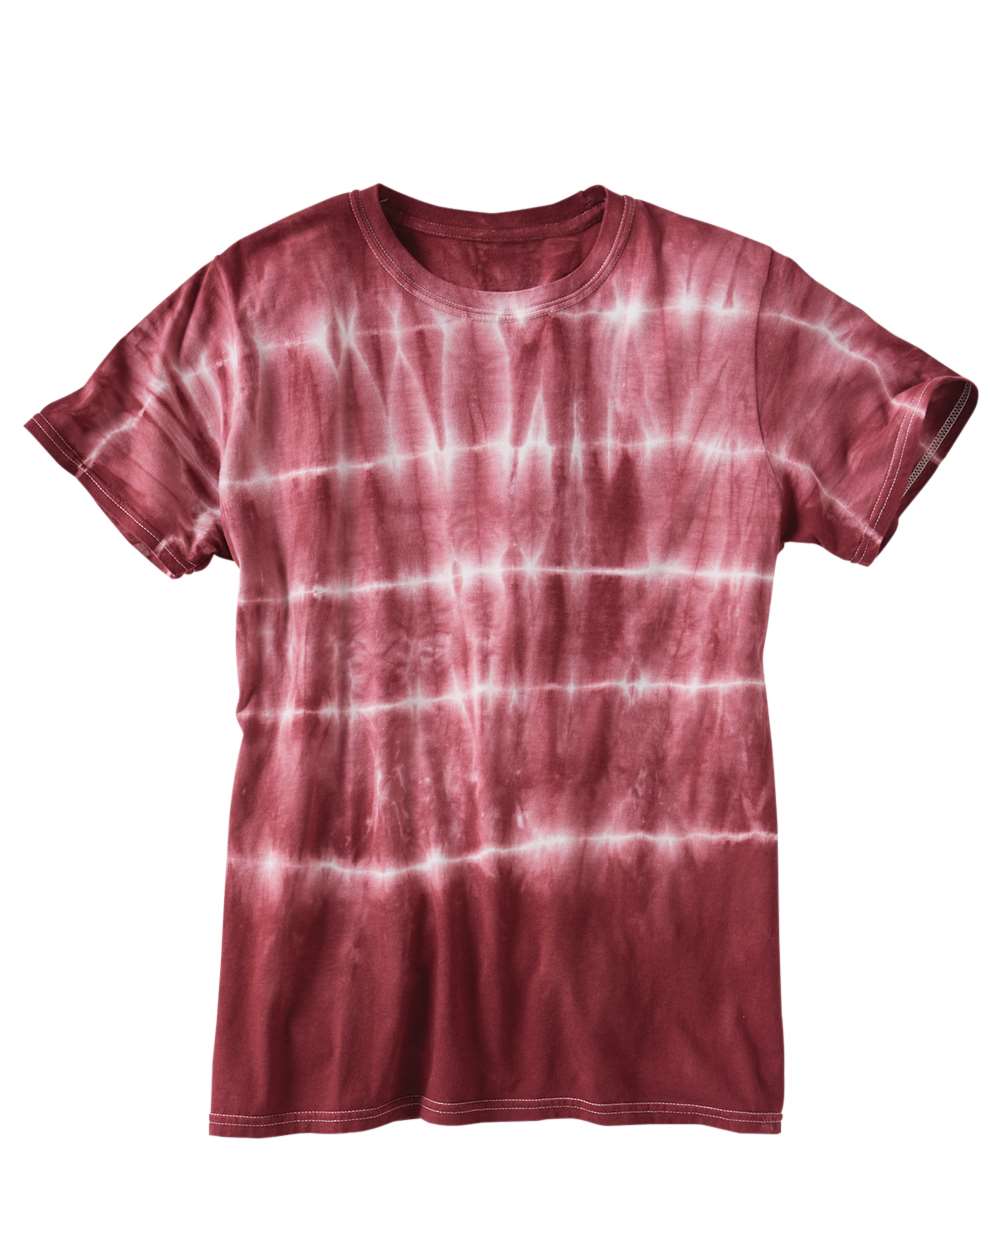 DYEMITNOE&#xAE;- Shibori Tie-Dyed T-Shirt